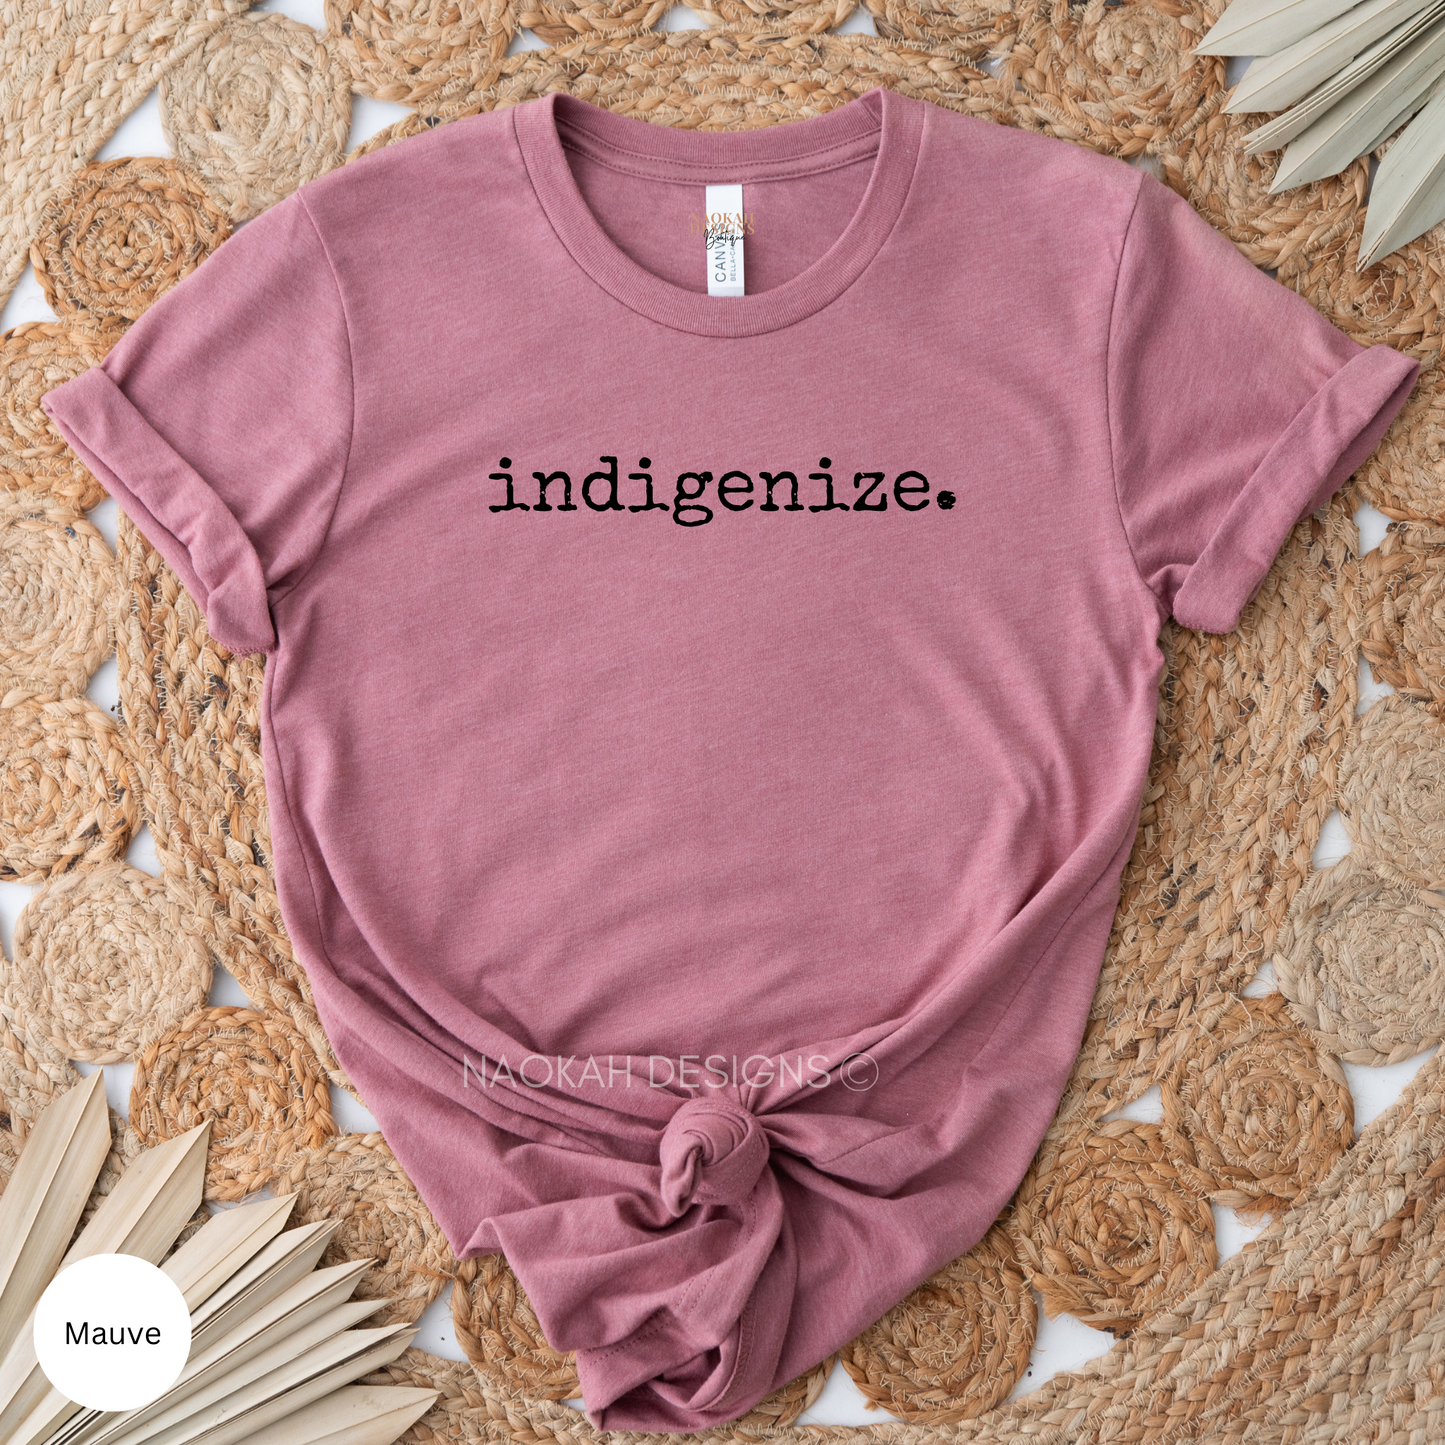 indigenize shirt, indigenous shirt, native shirt, decolonize your mind shirt, dismantle shirt, indigenous resilience shirt